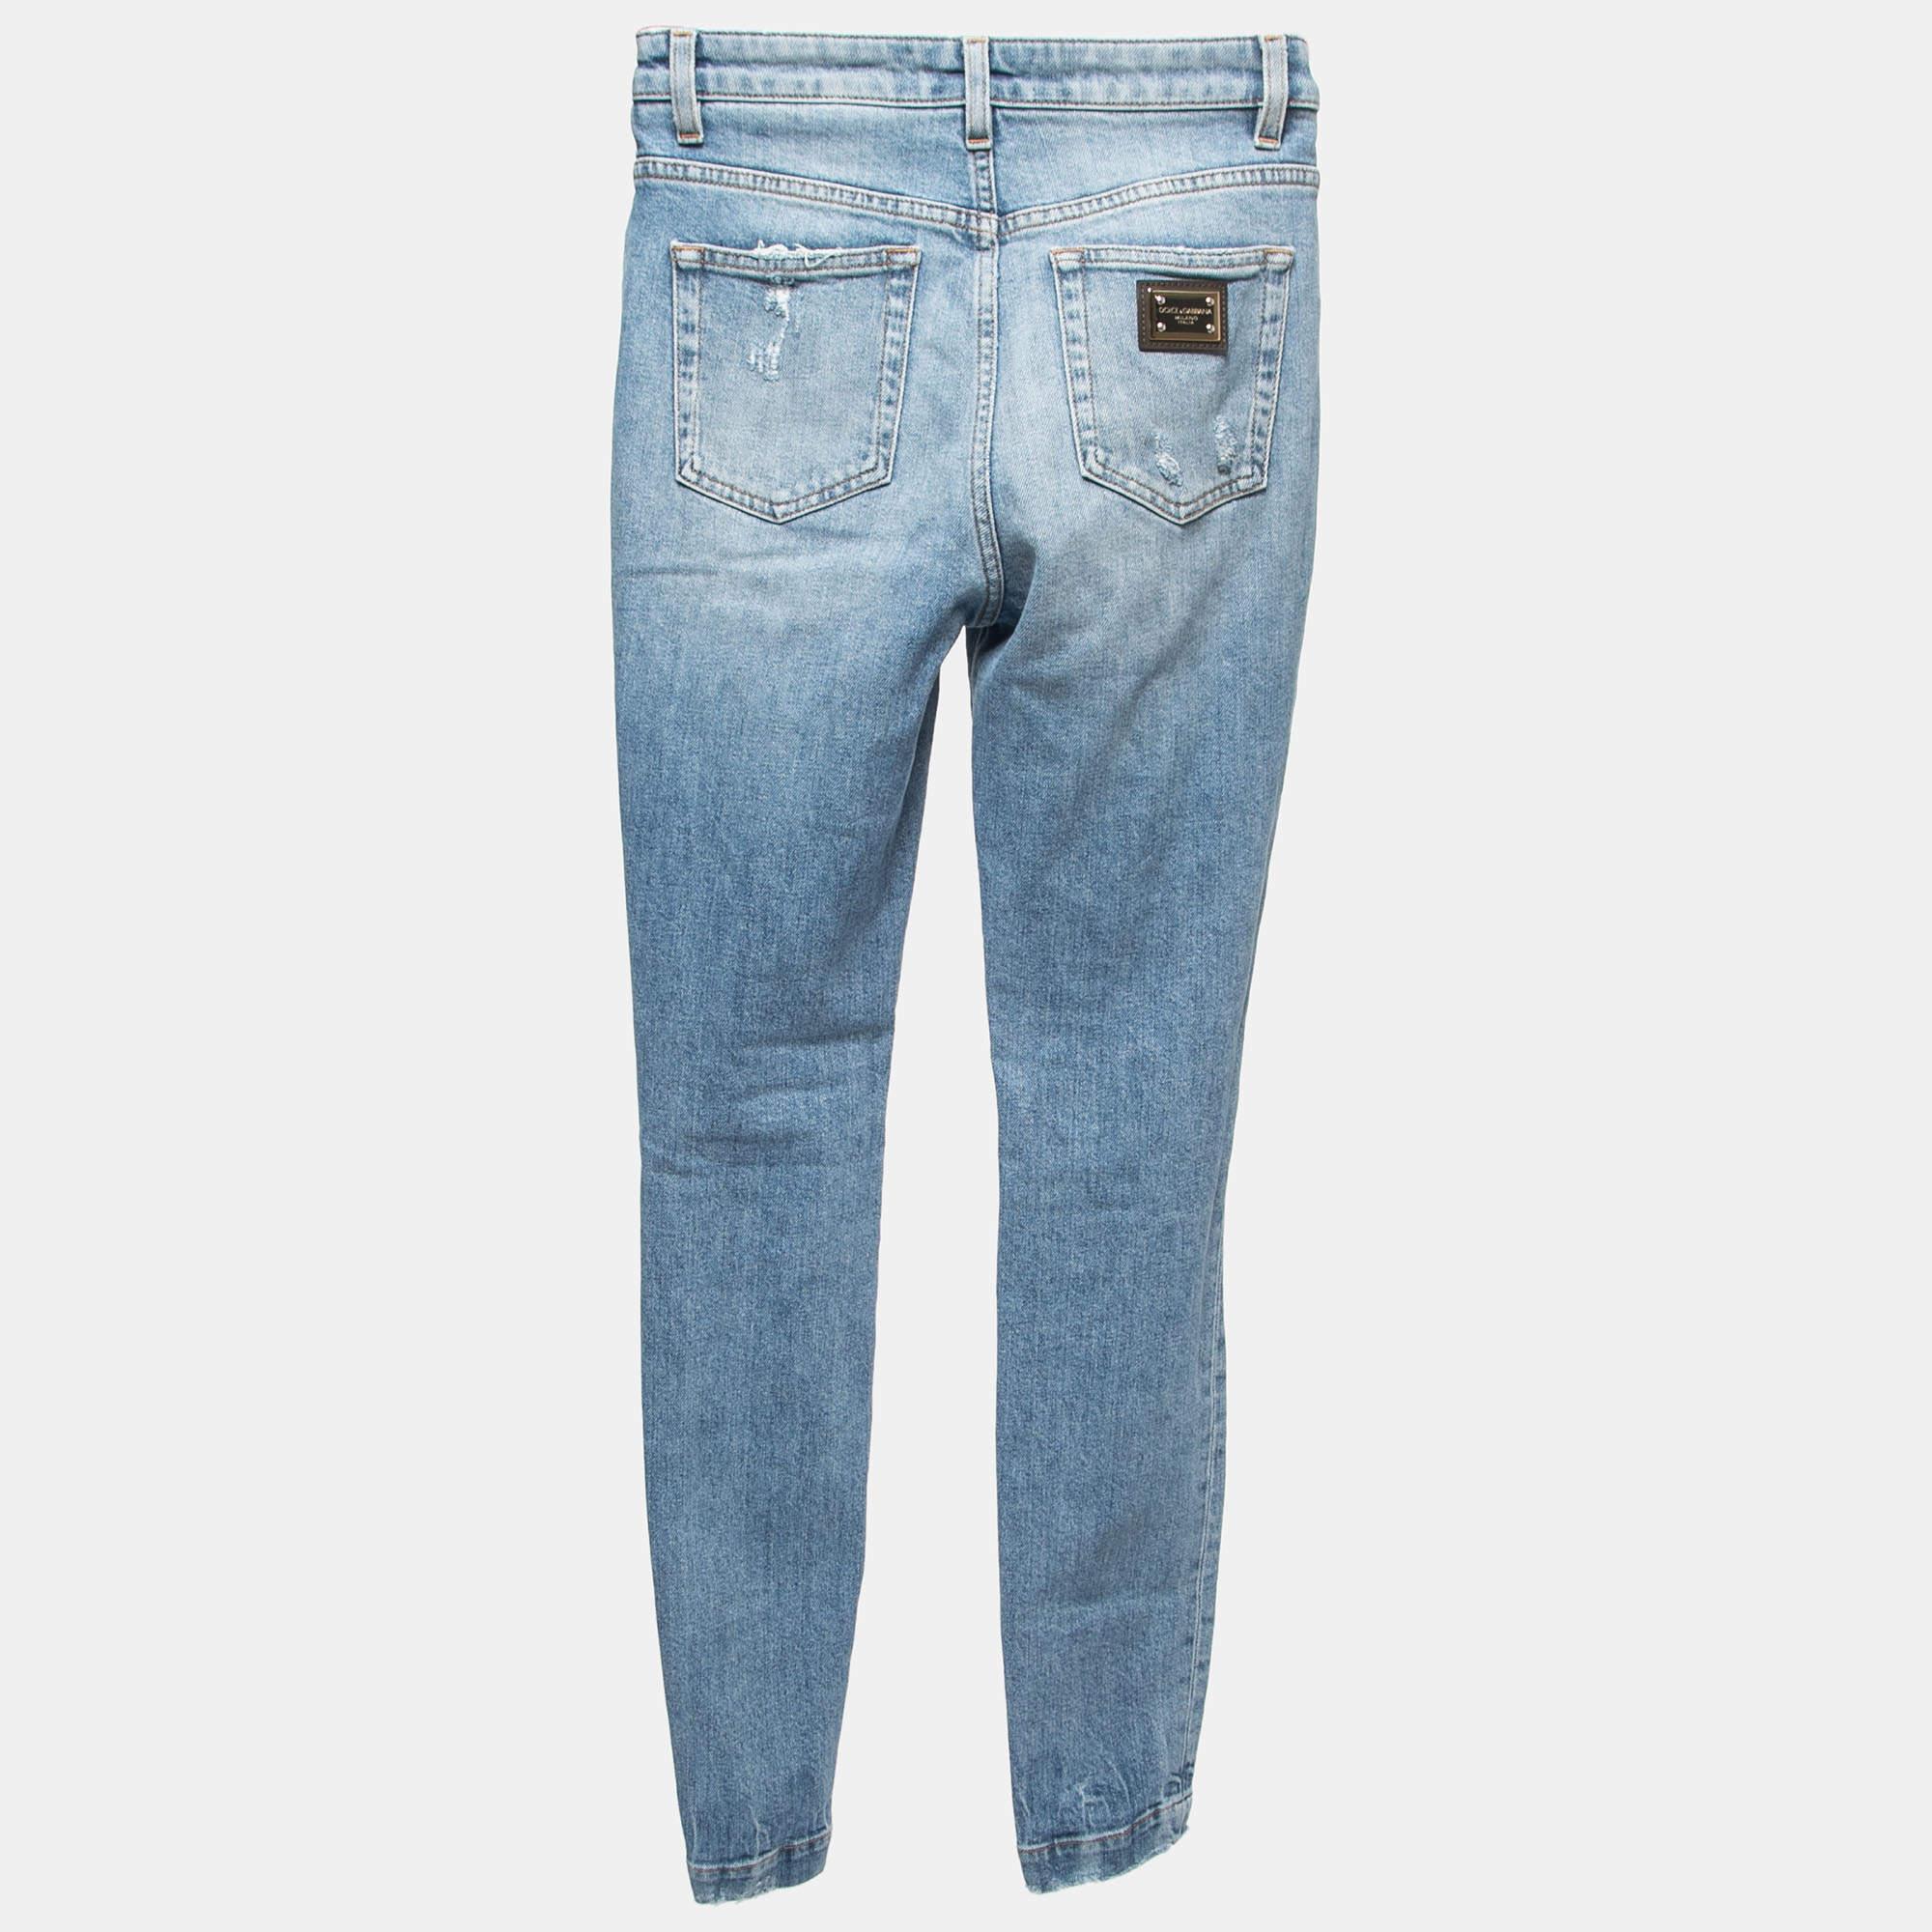 Dolce & Gabbana Blue Distressed Denim Audrey Skinny Jeans S Waist 25